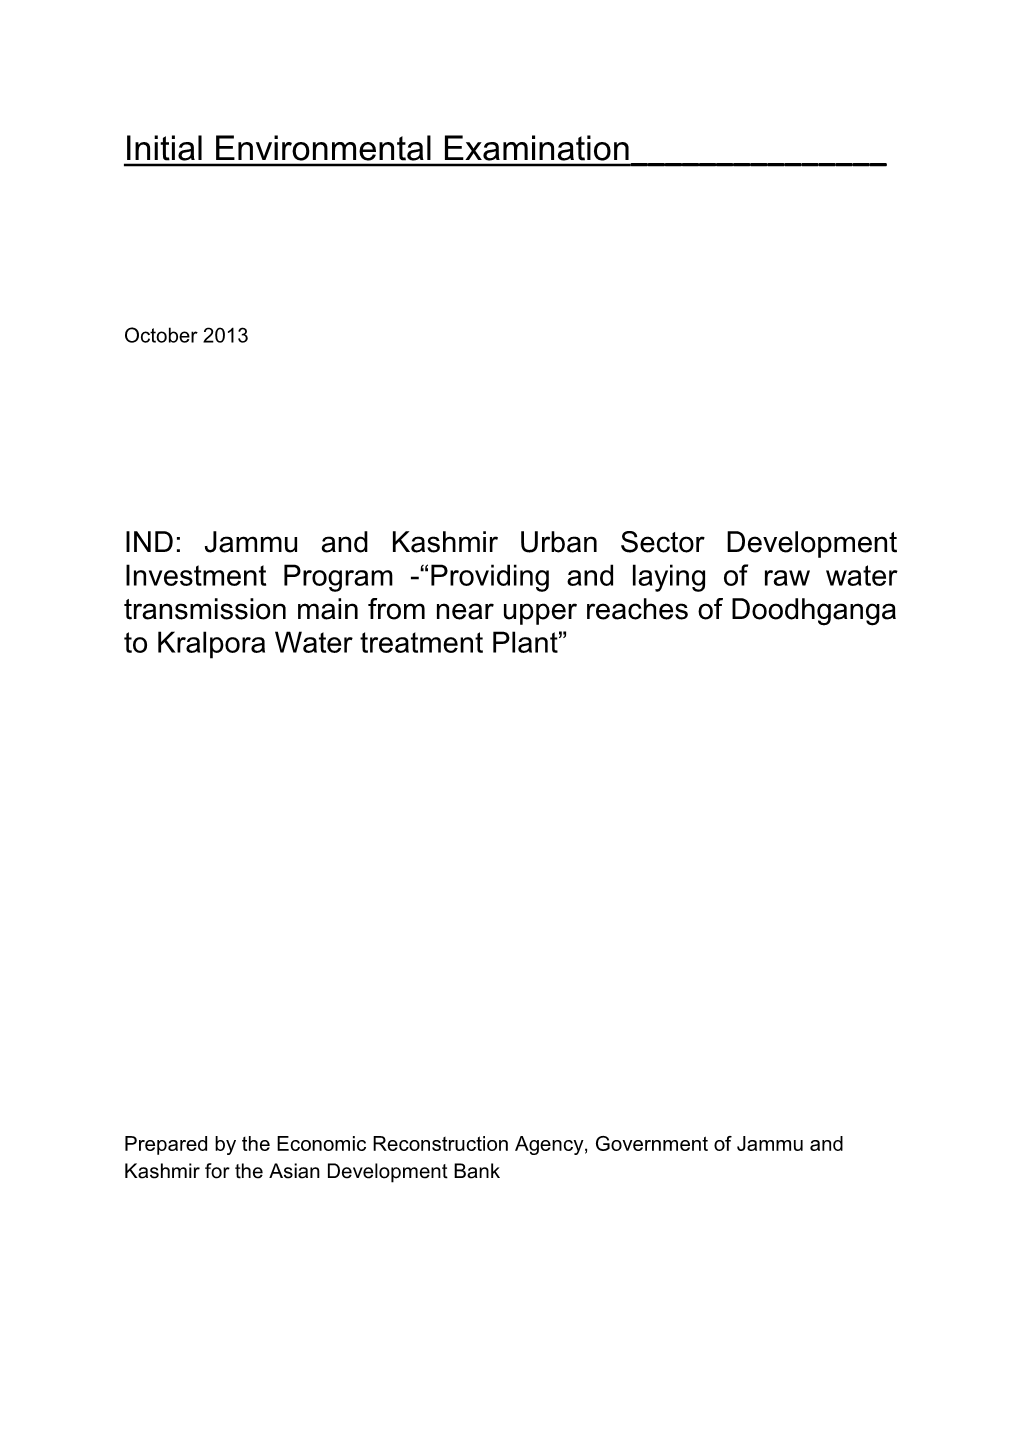 Jammu and Kashmir Urban Sector Development Investment Program